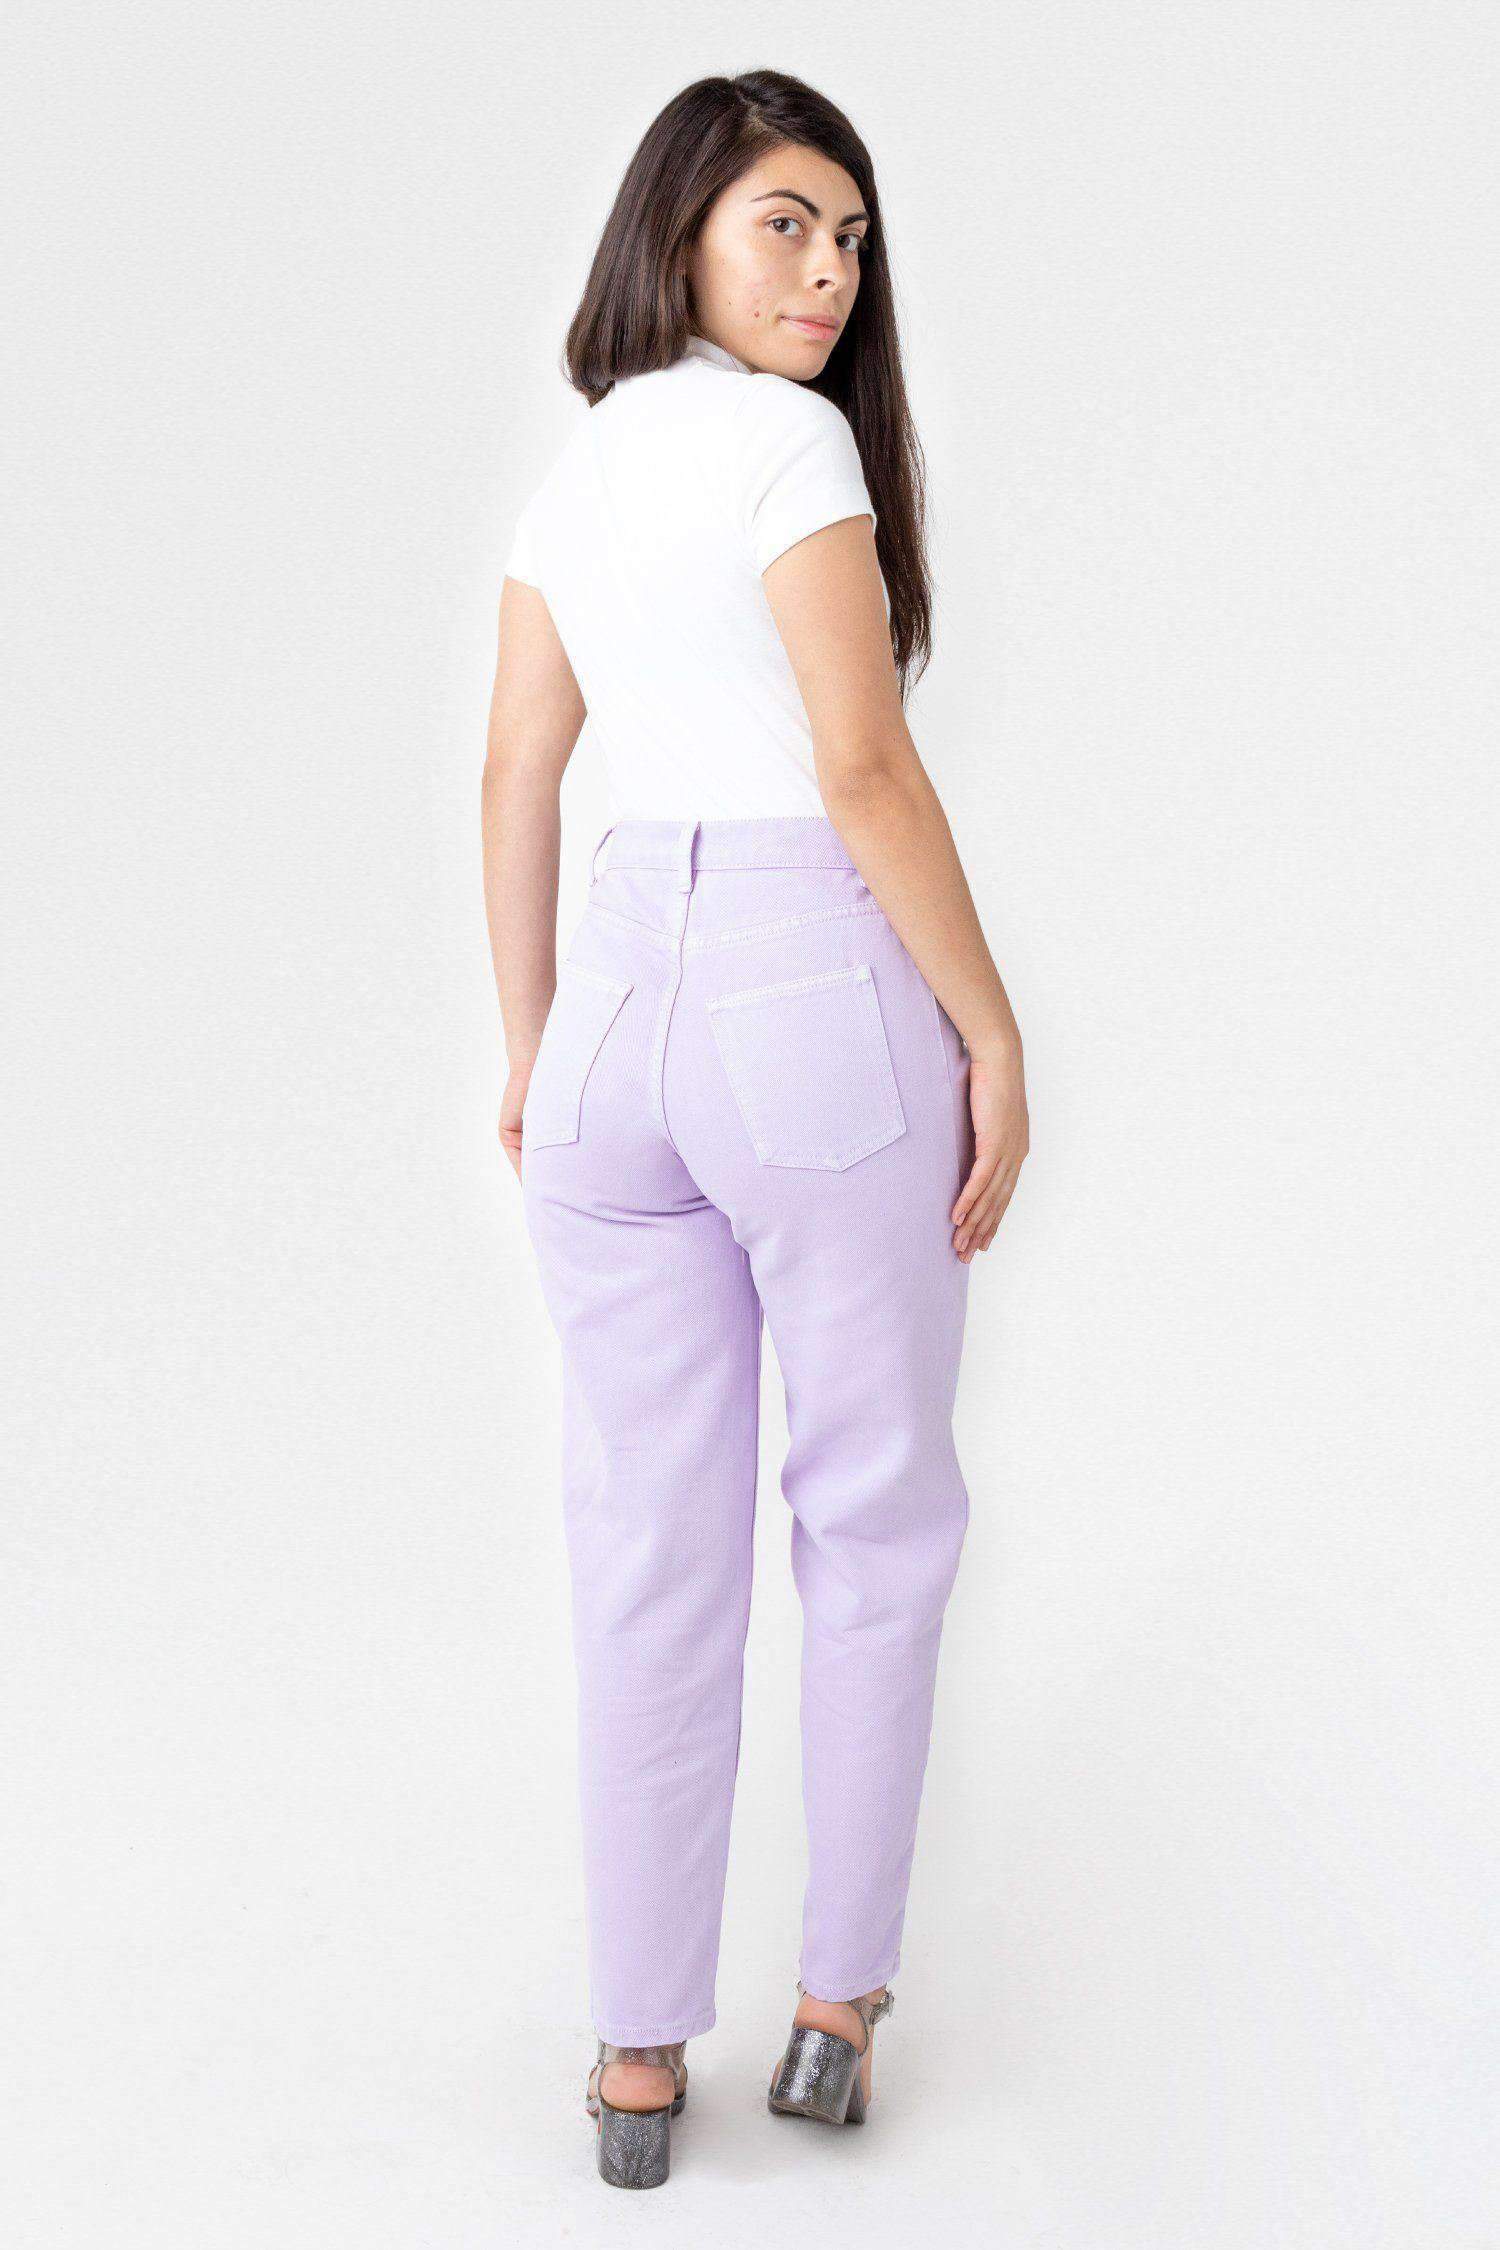 RBDW01GD - Garment Dye Women's Relaxed Fit Bull Denim Jean Jeans Los Angeles Apparel Lavender 24/28 